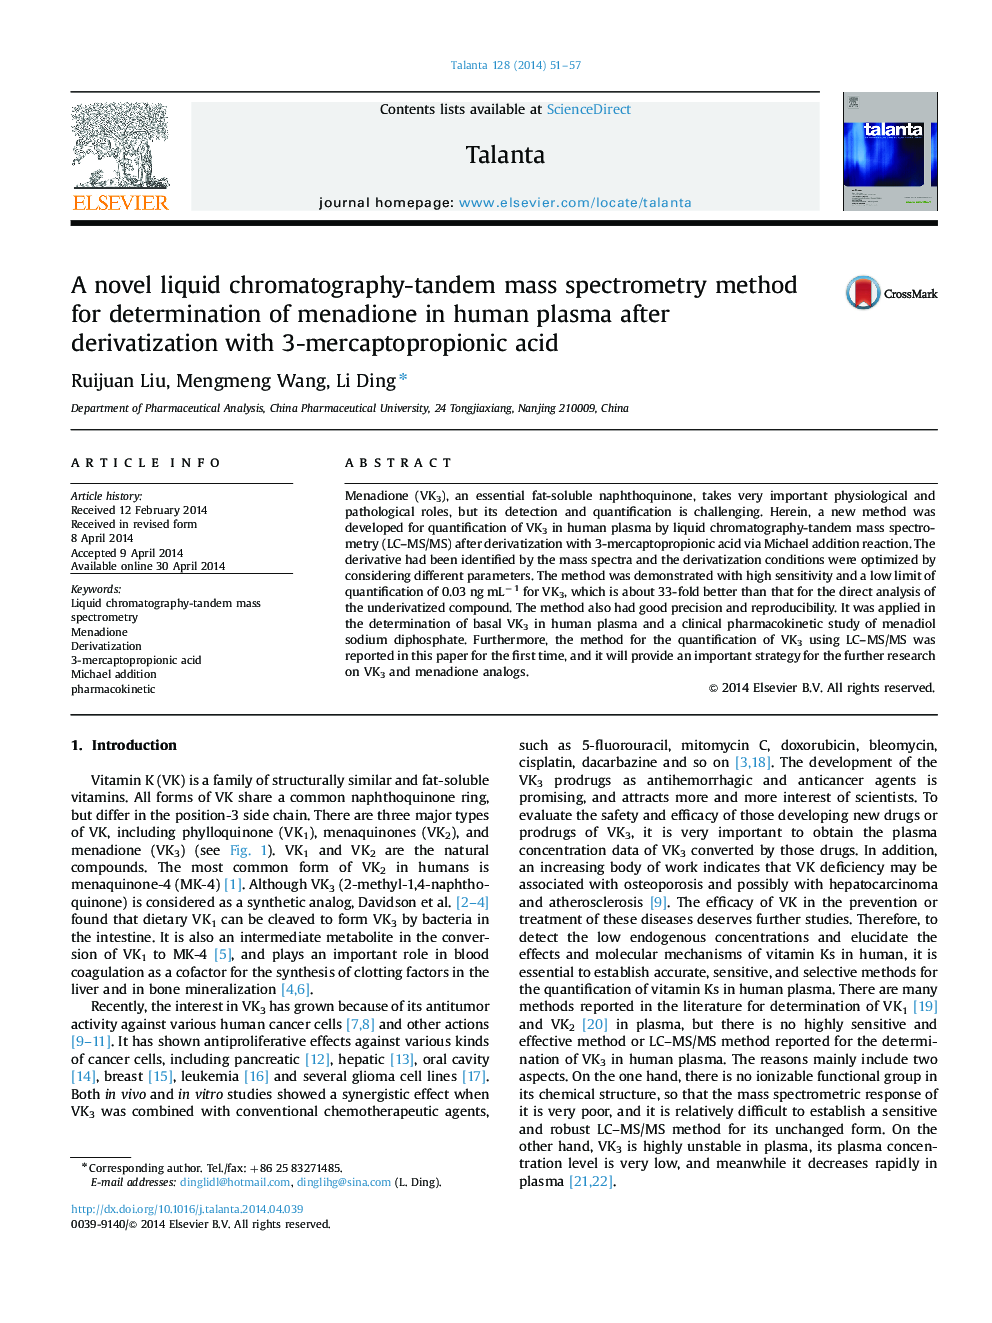 A novel liquid chromatography-tandem mass spectrometry method for determination of menadione in human plasma after derivatization with 3-mercaptopropionic acid